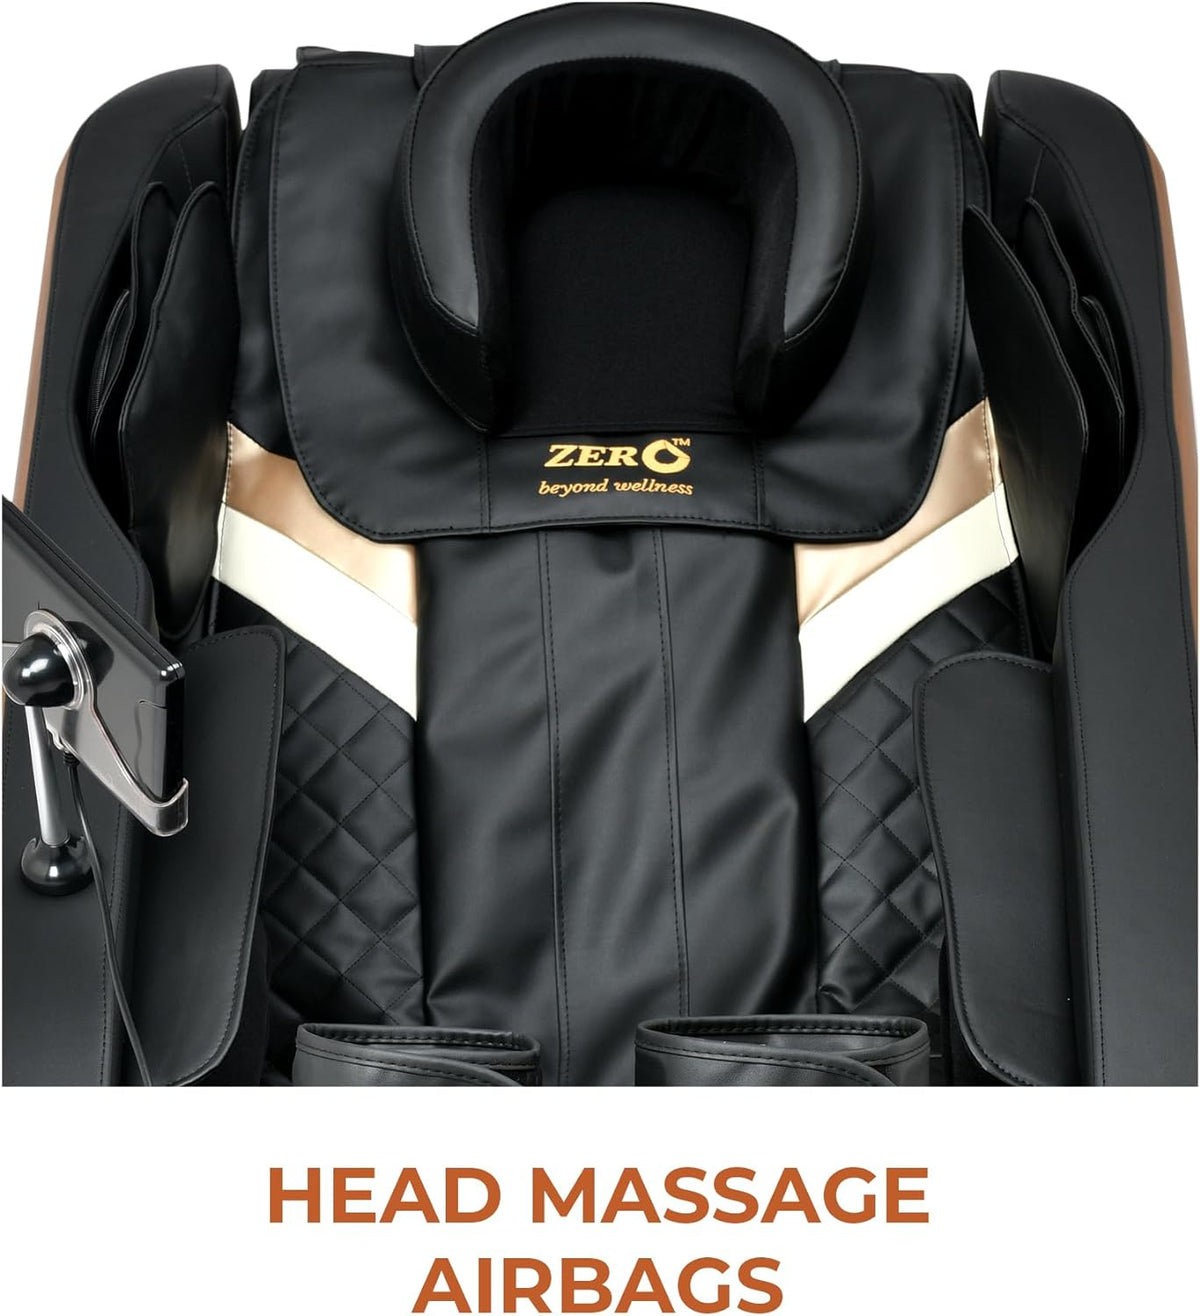 U-Classic Massage Chair